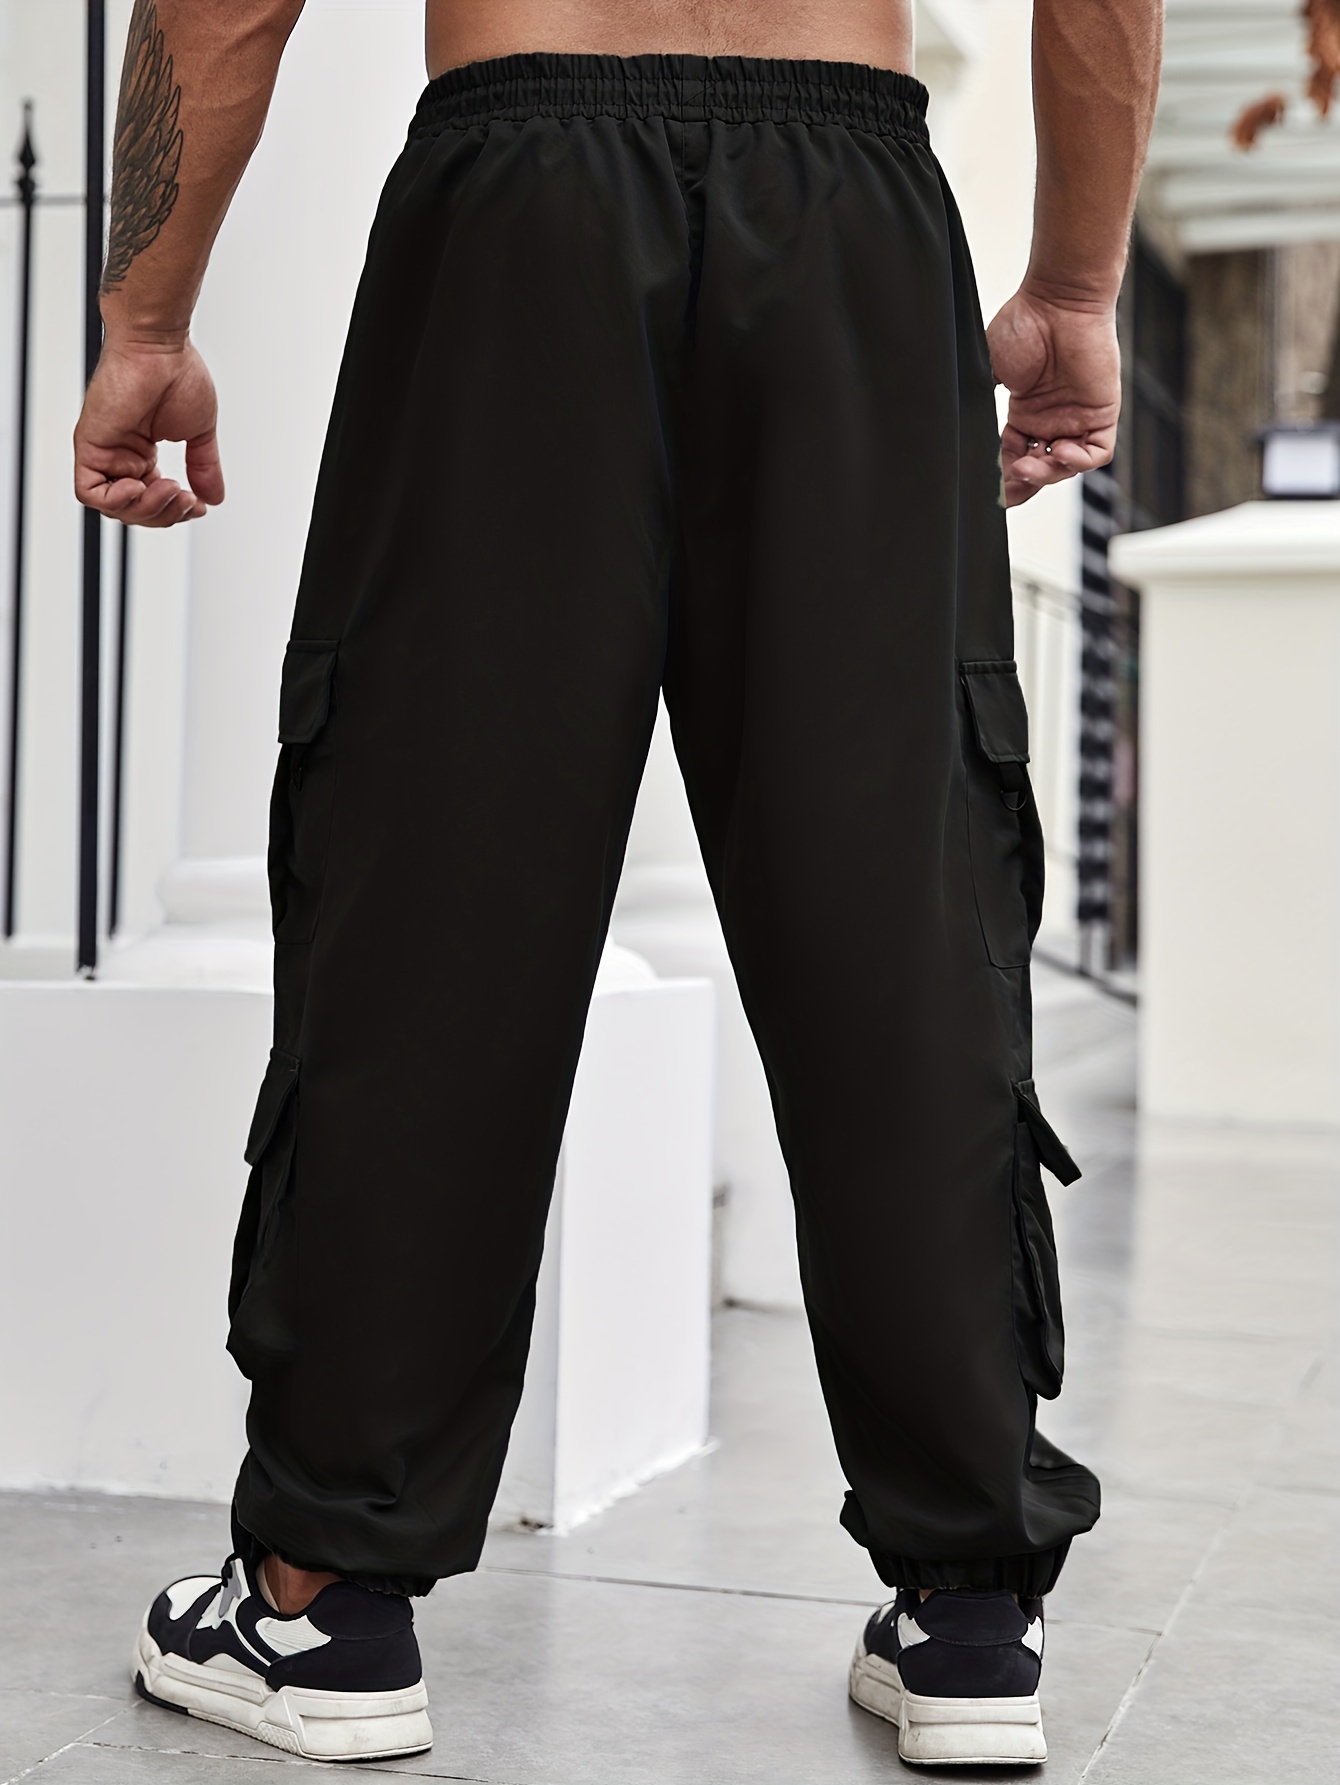 Plus Size Men's Solid Cargo Pants Autumn/winter Street Style